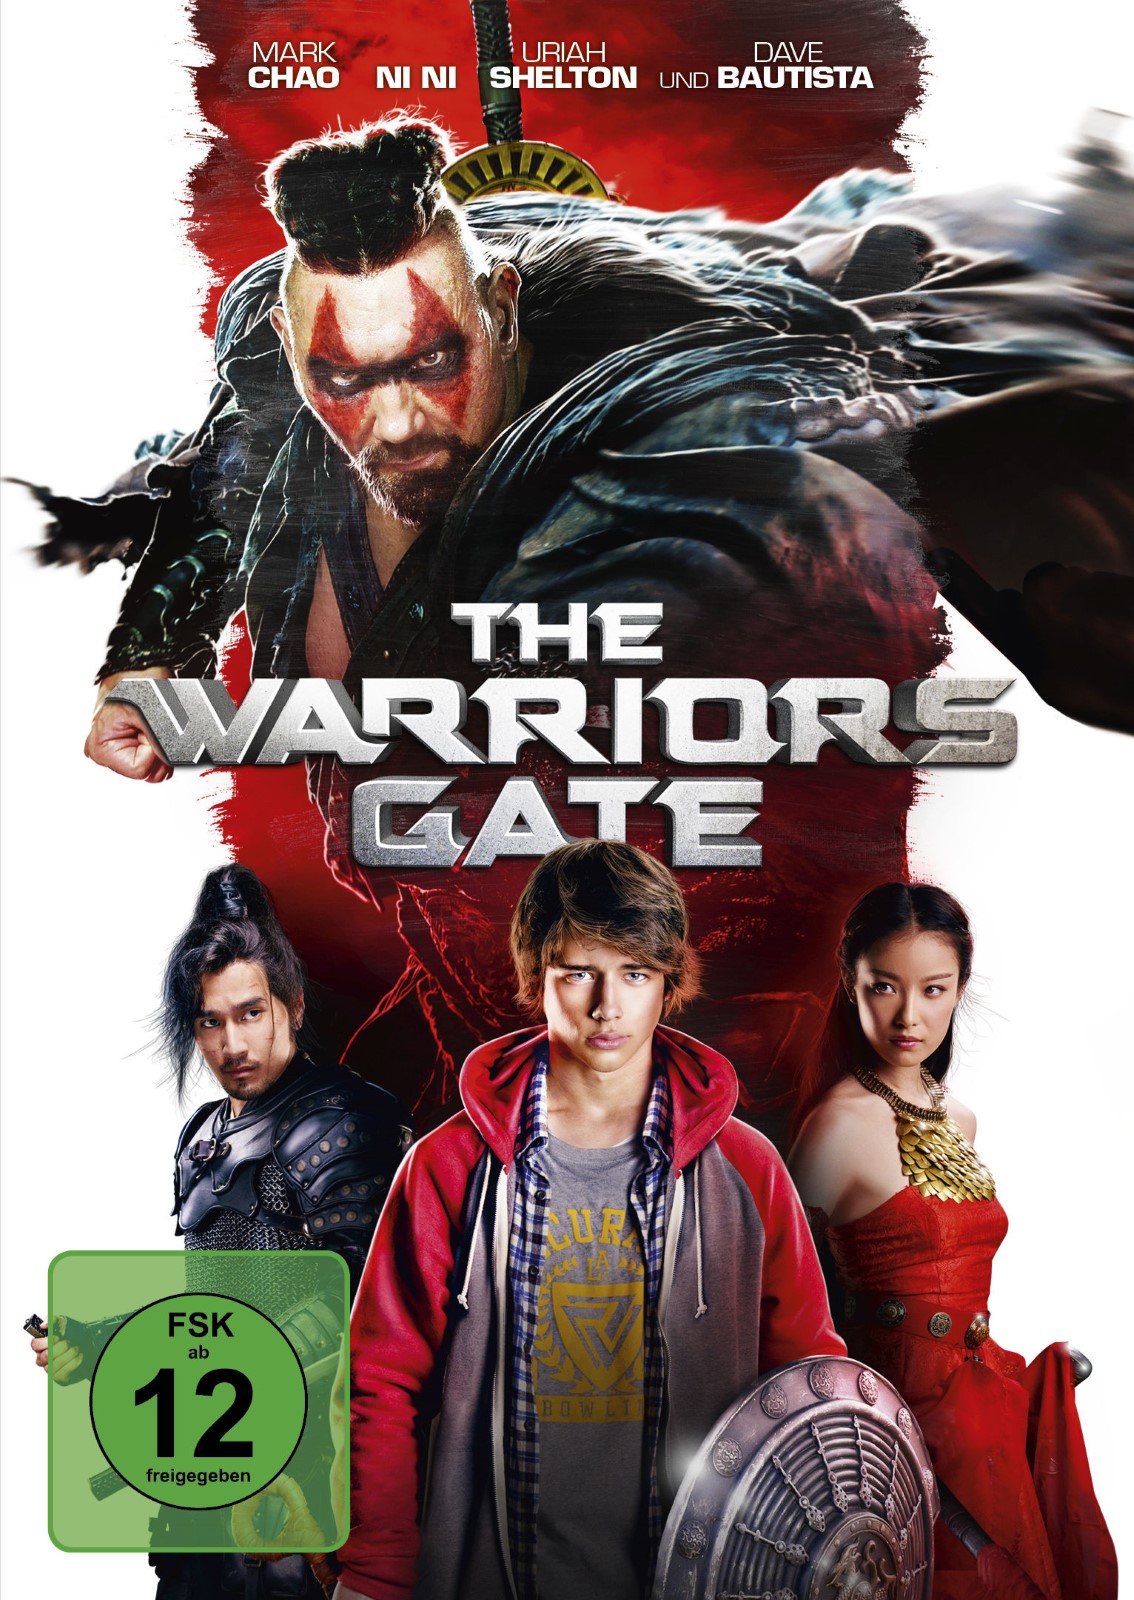 enter the warriors gate movie